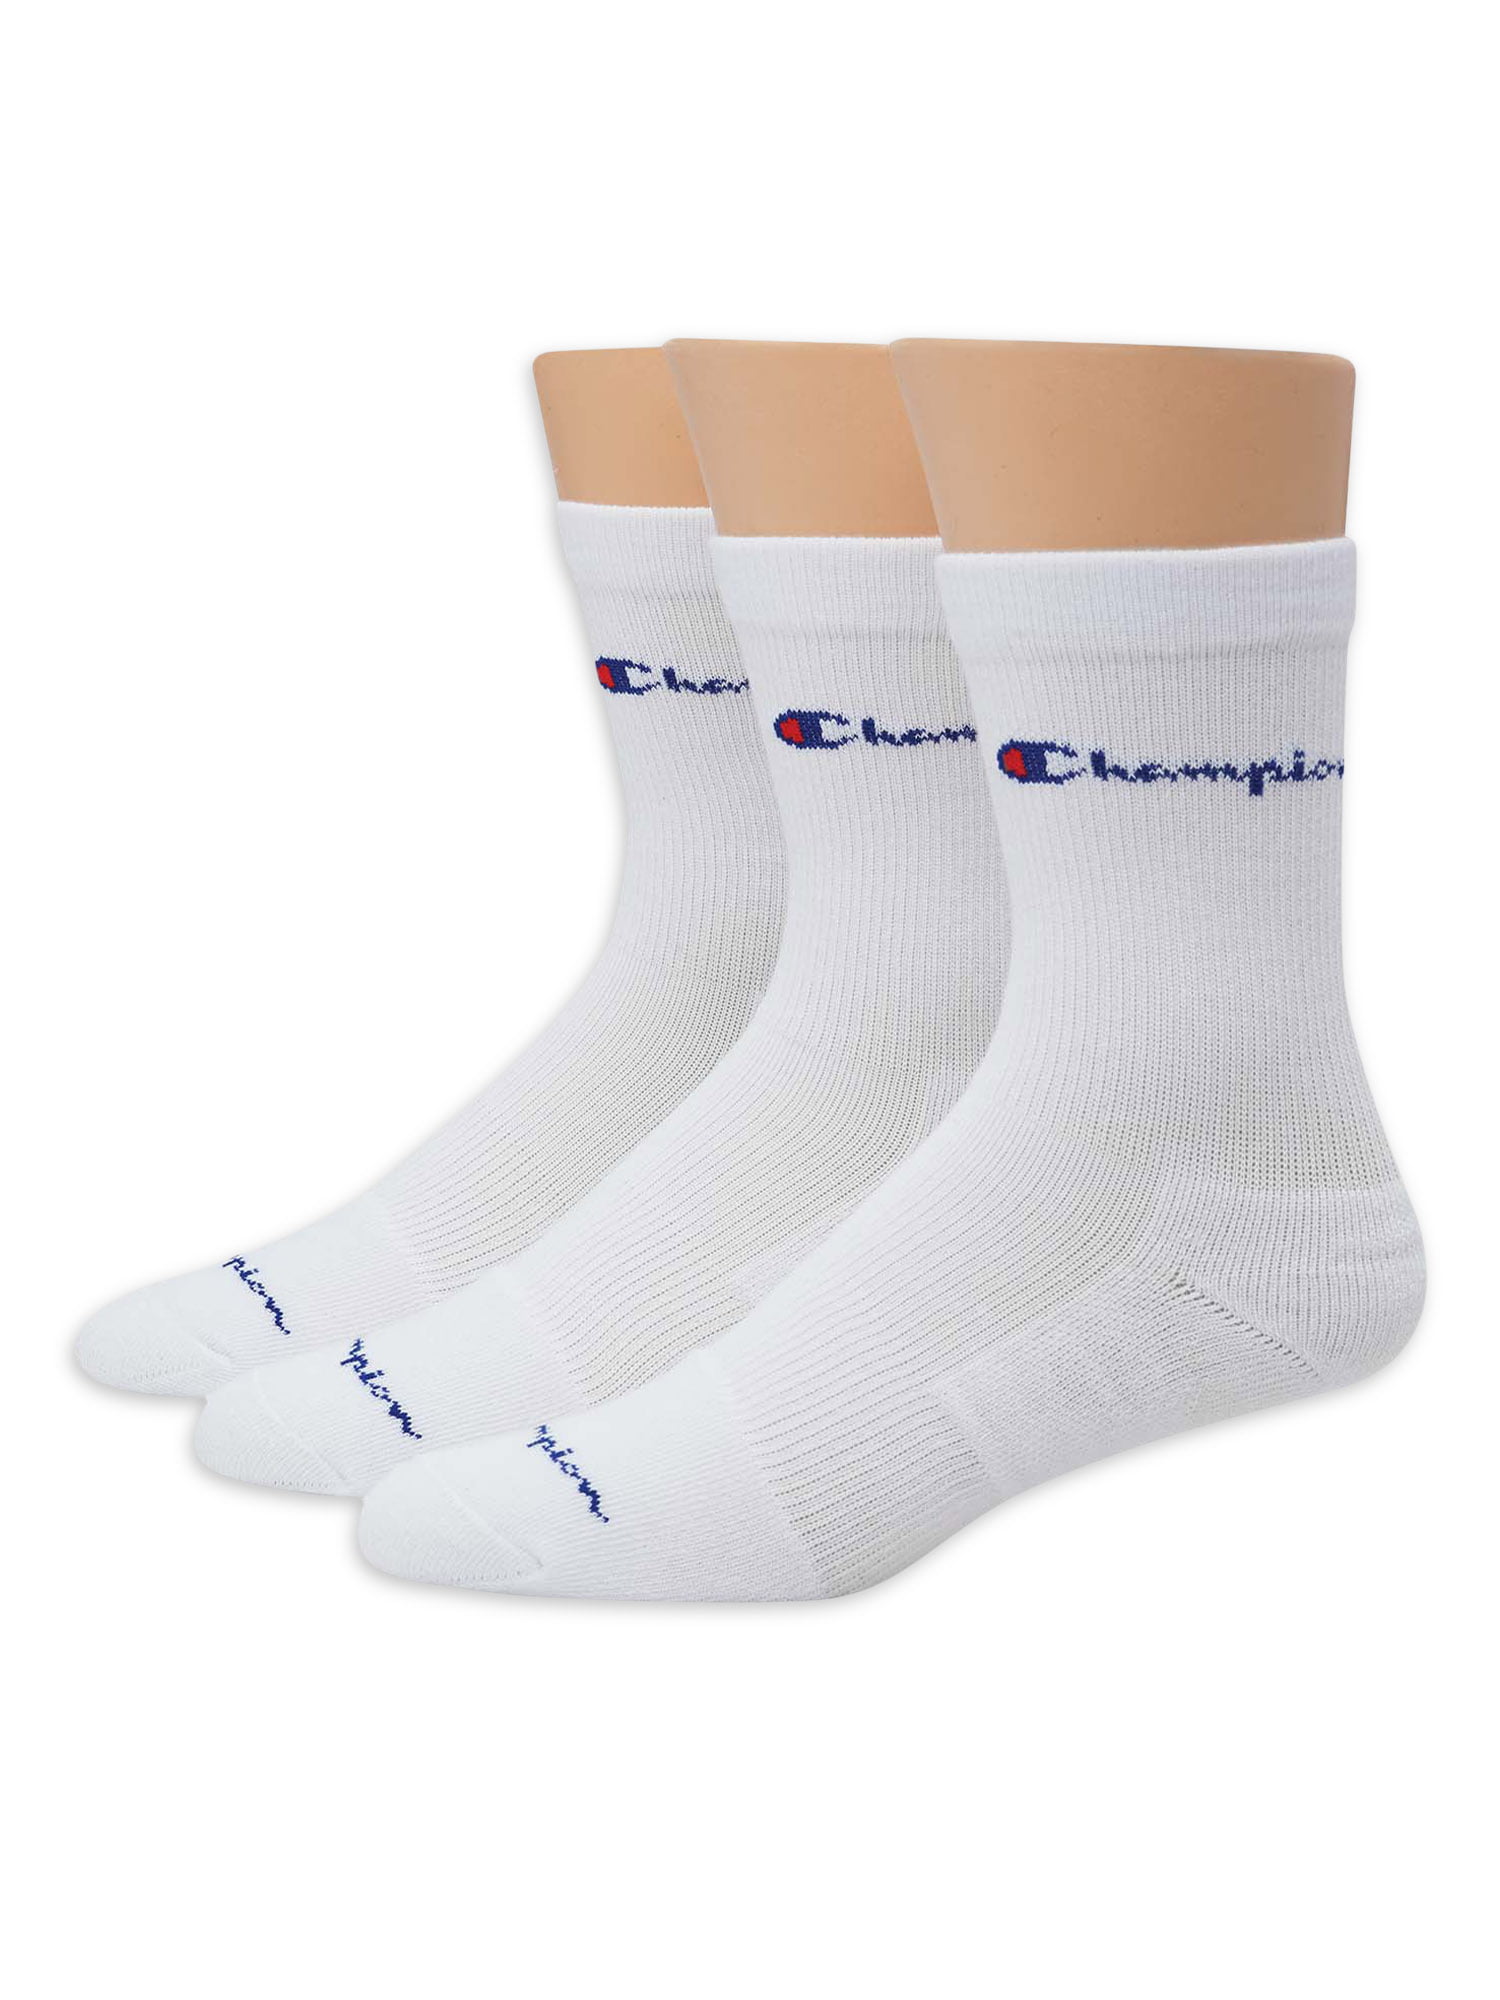 Champion Mens Crew Socks 3X Pack Regular Cotton Office Gym Sports Trainer  Socks